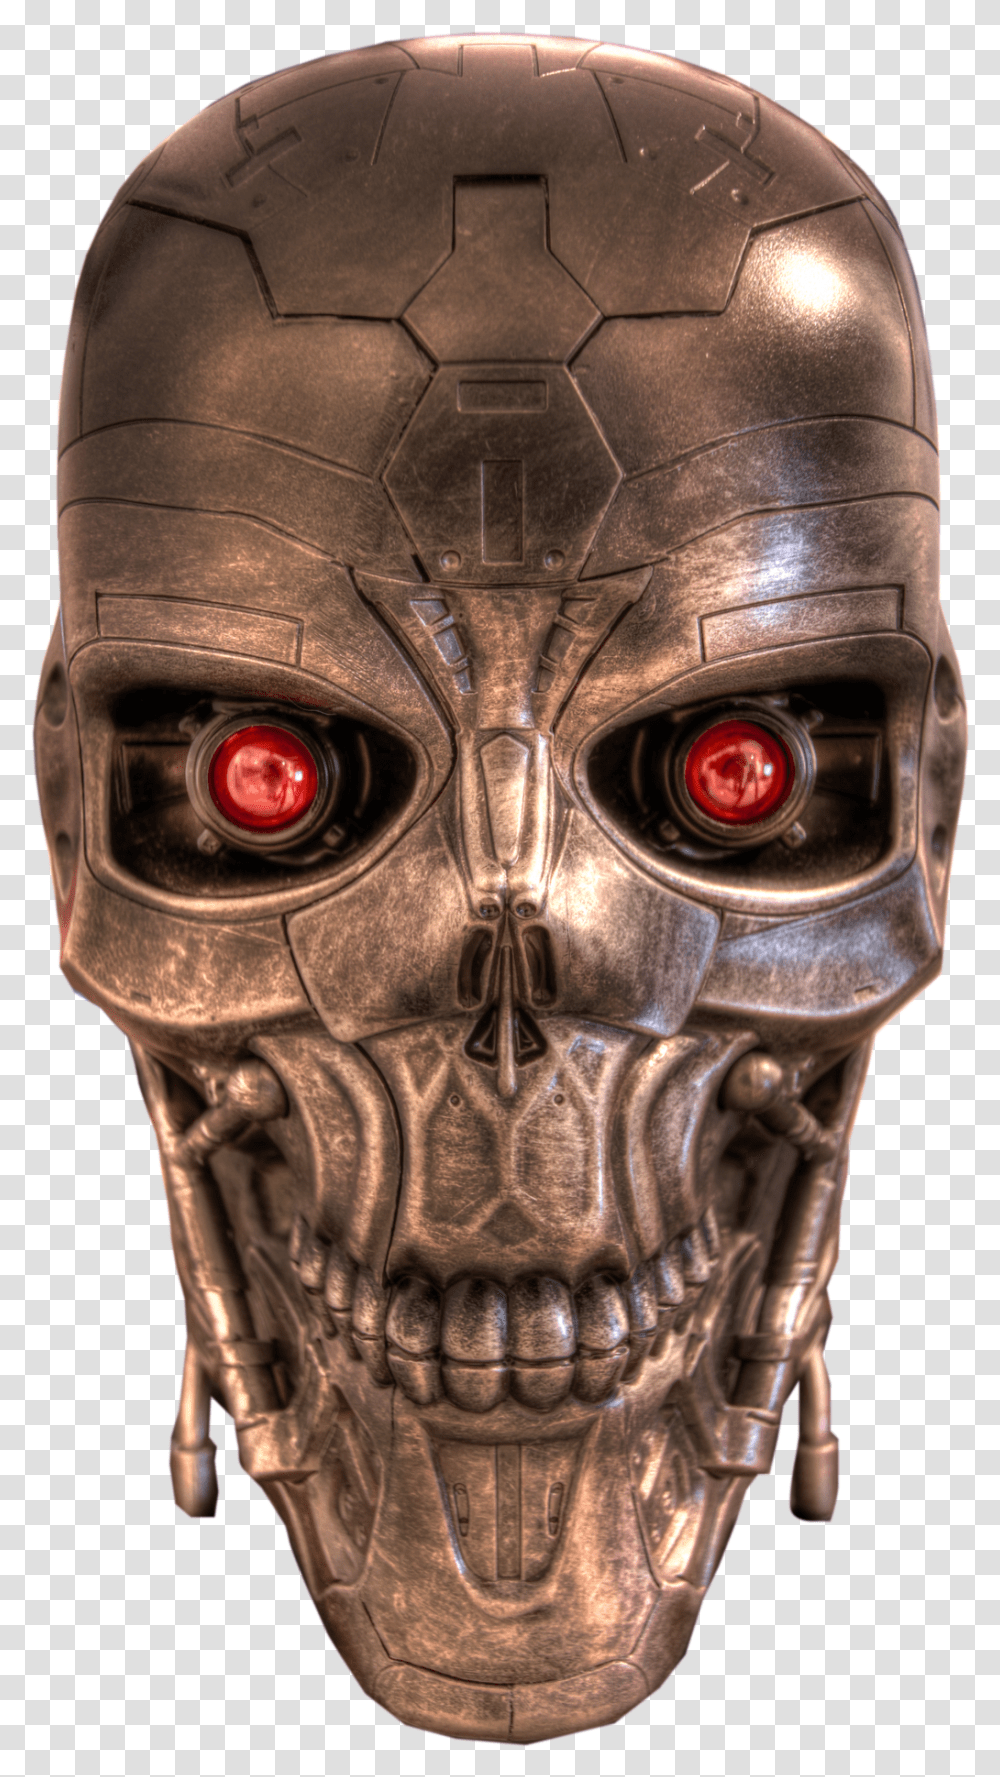 Download Terminator Skull Image For Free Robot Head Bg, Helmet, Clothing, Apparel, Mask Transparent Png